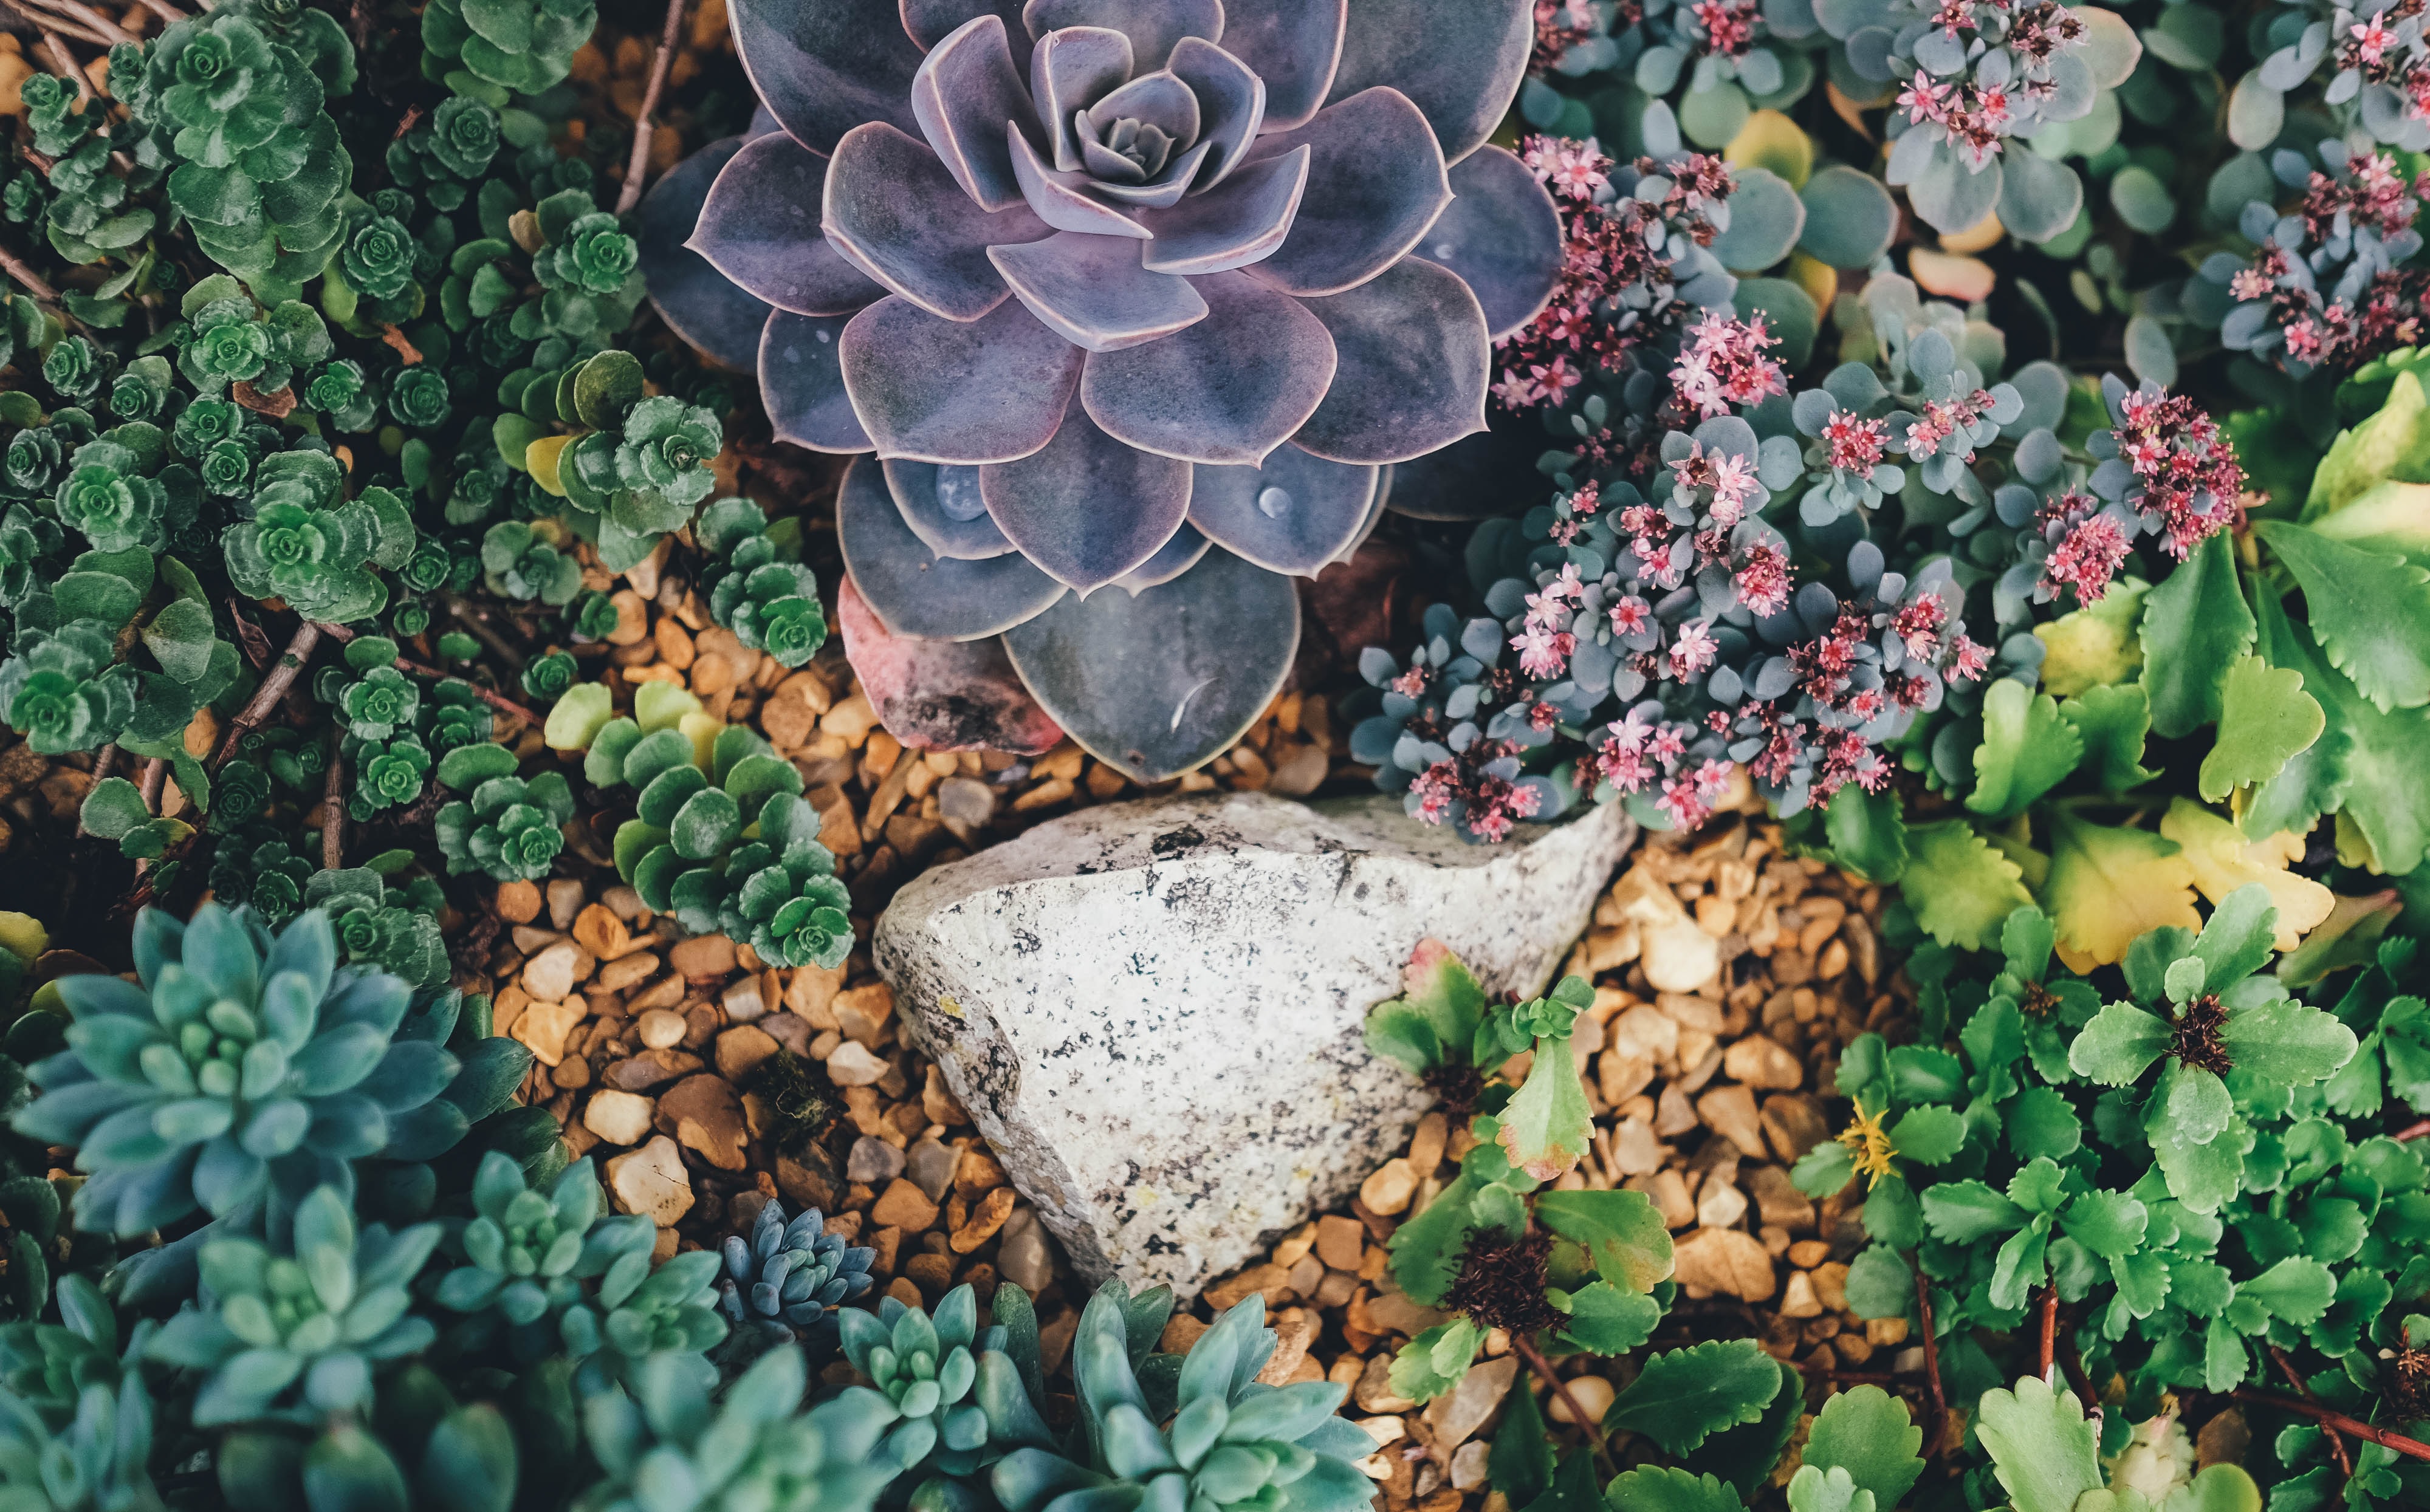 Succulent plants in gravel bed